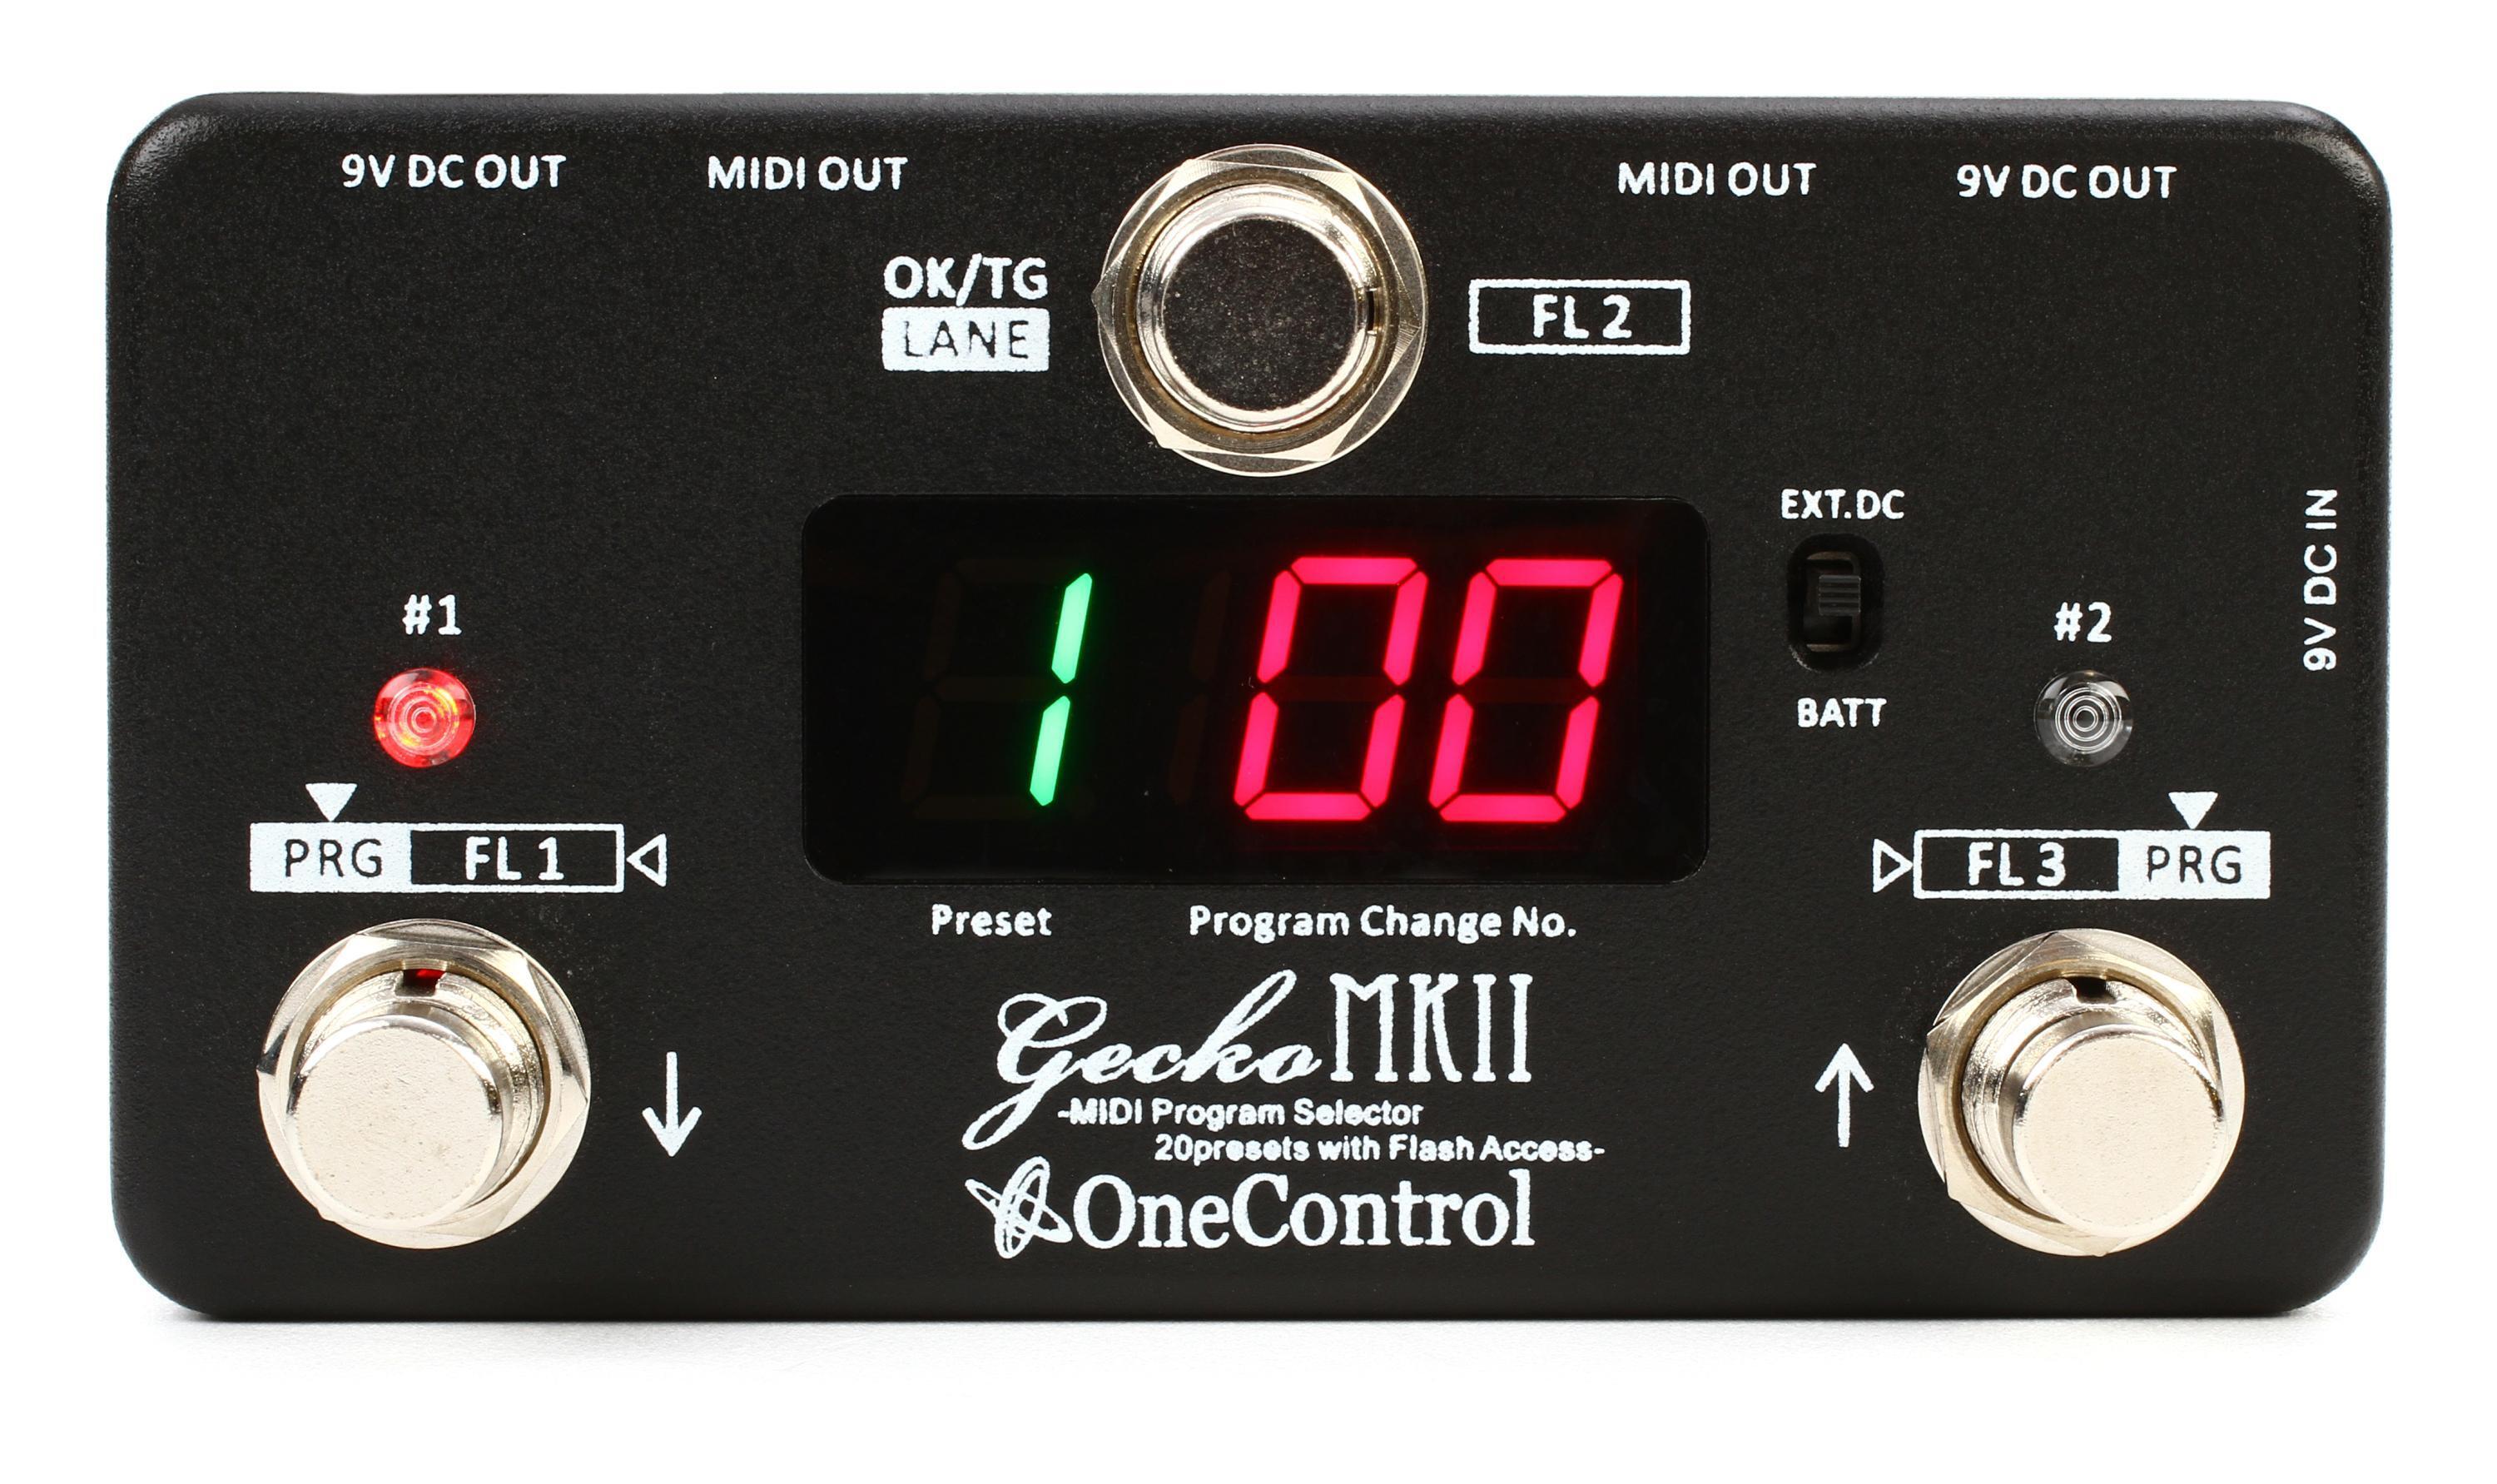 One Control Gecko Mark II MIDI Switcher